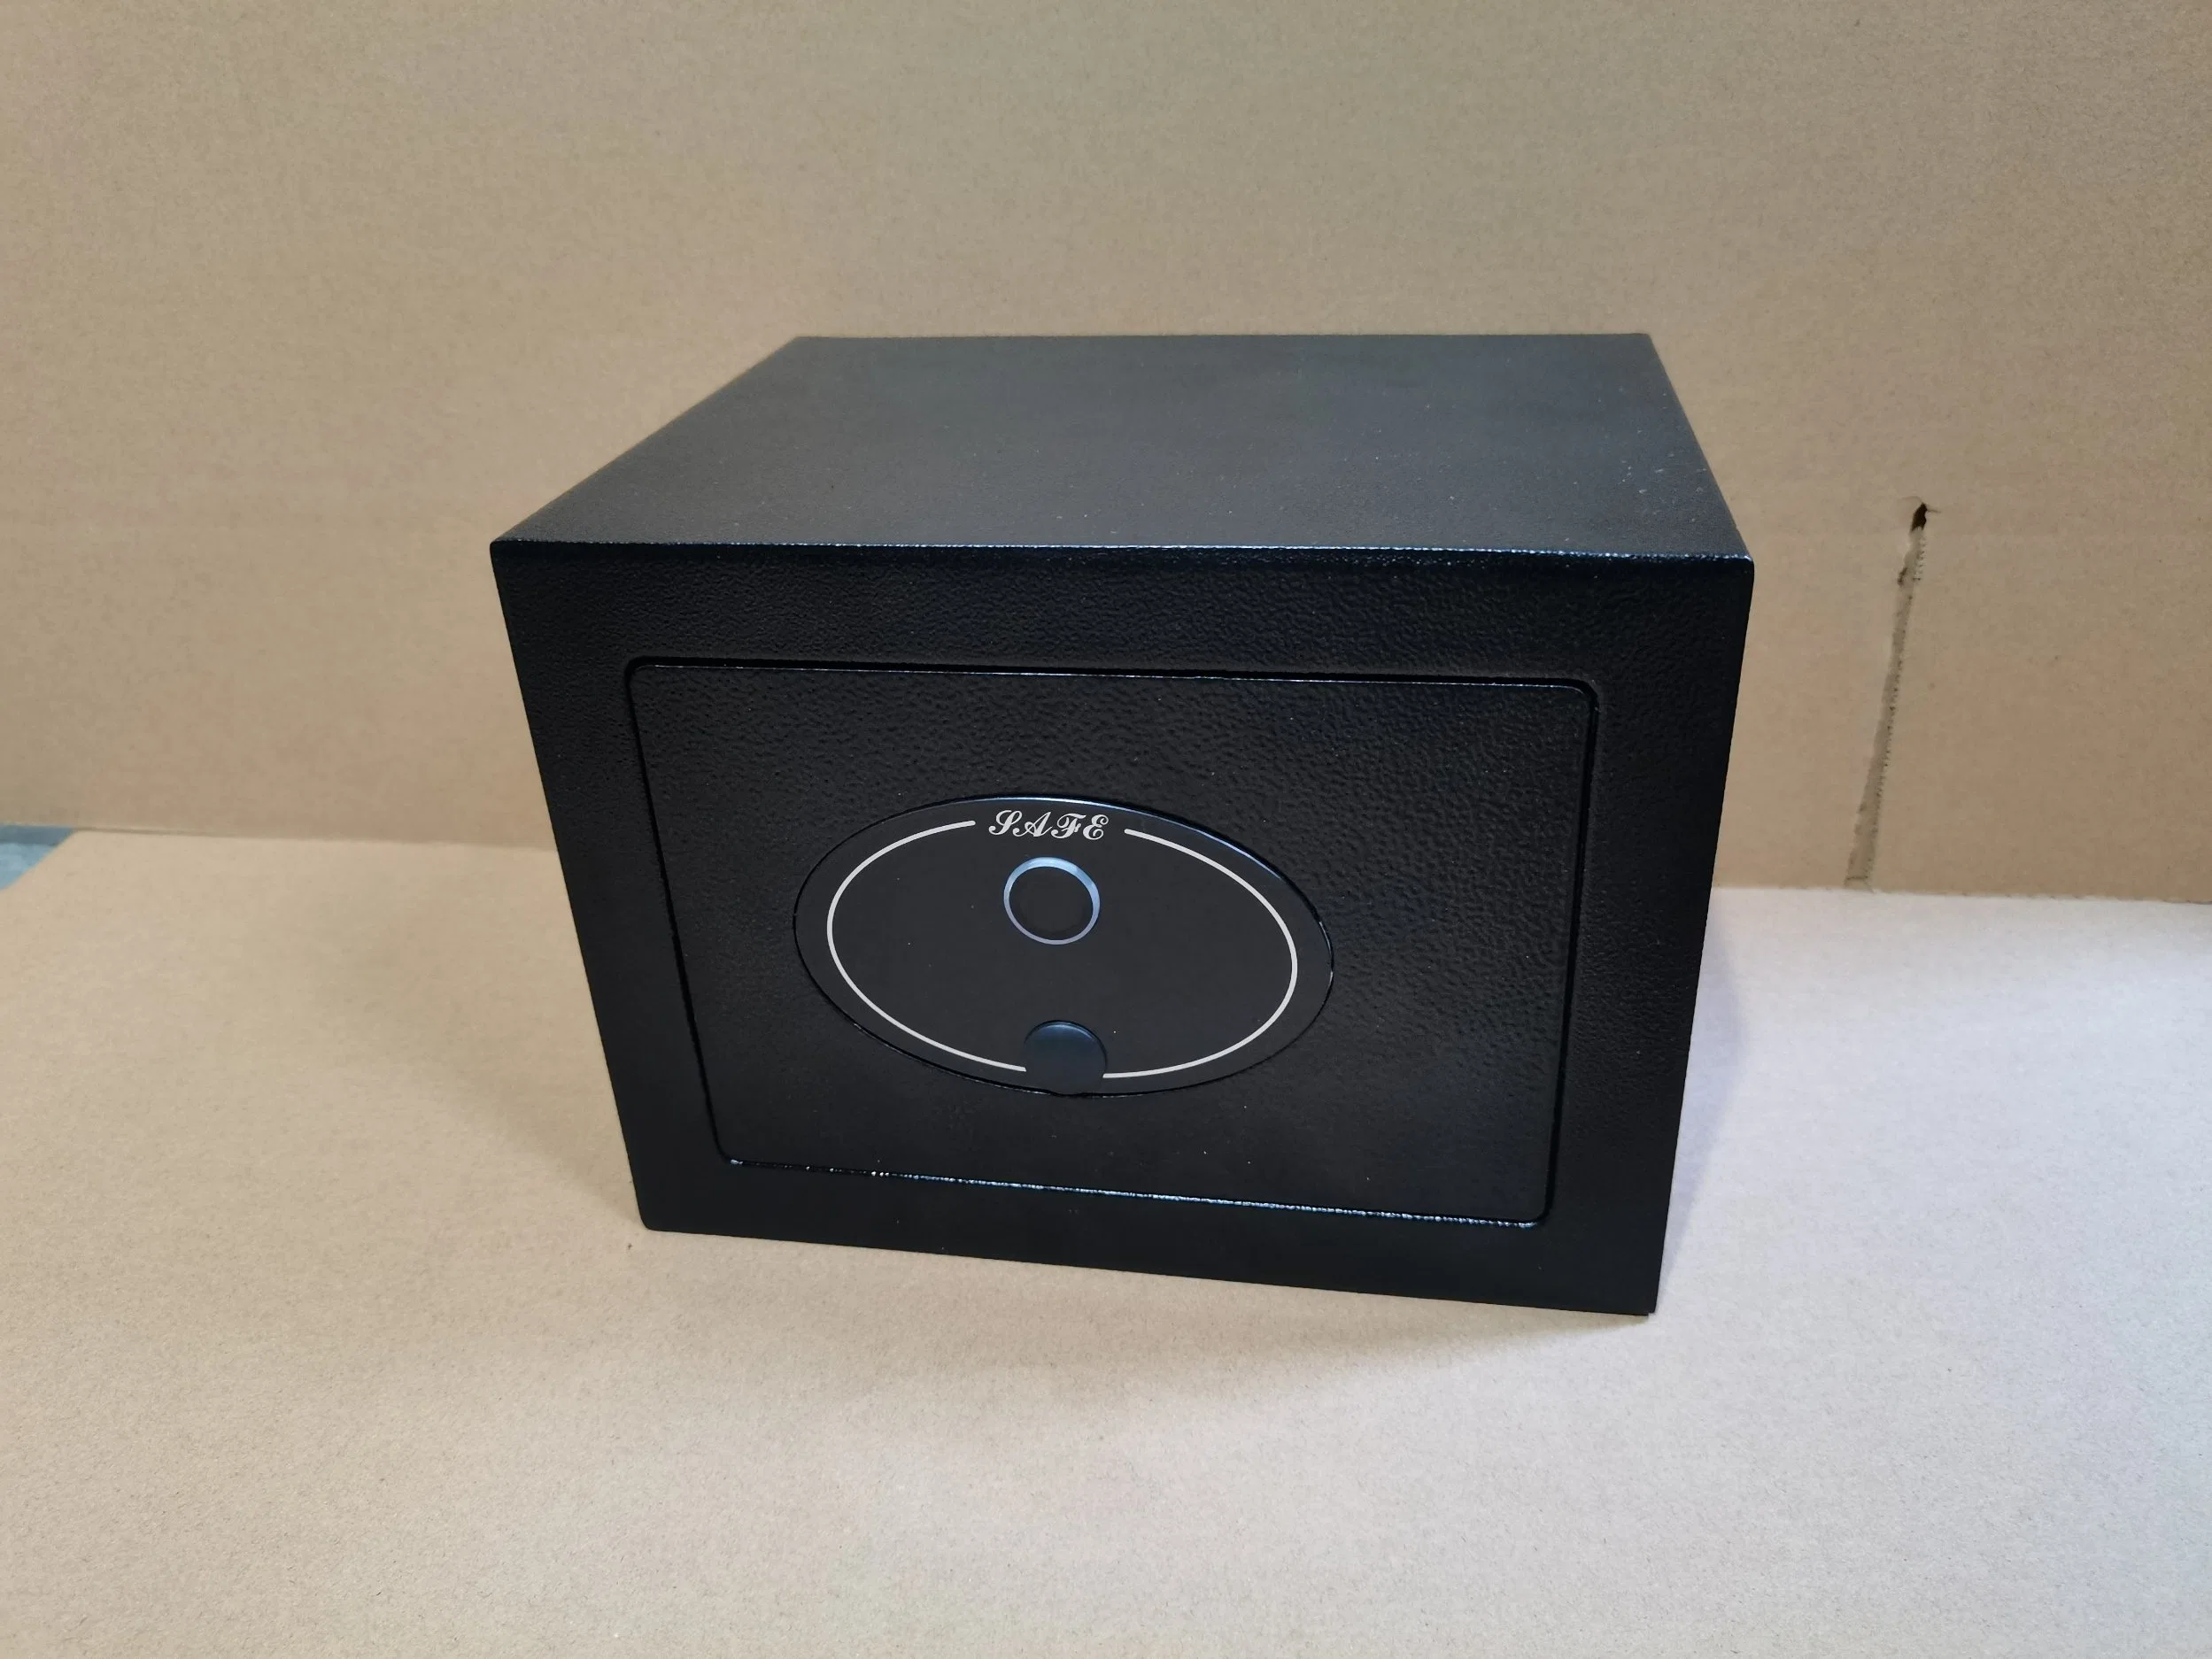 Hot Sale Fingerprint Lock Personal Safe Box with Indicator Light